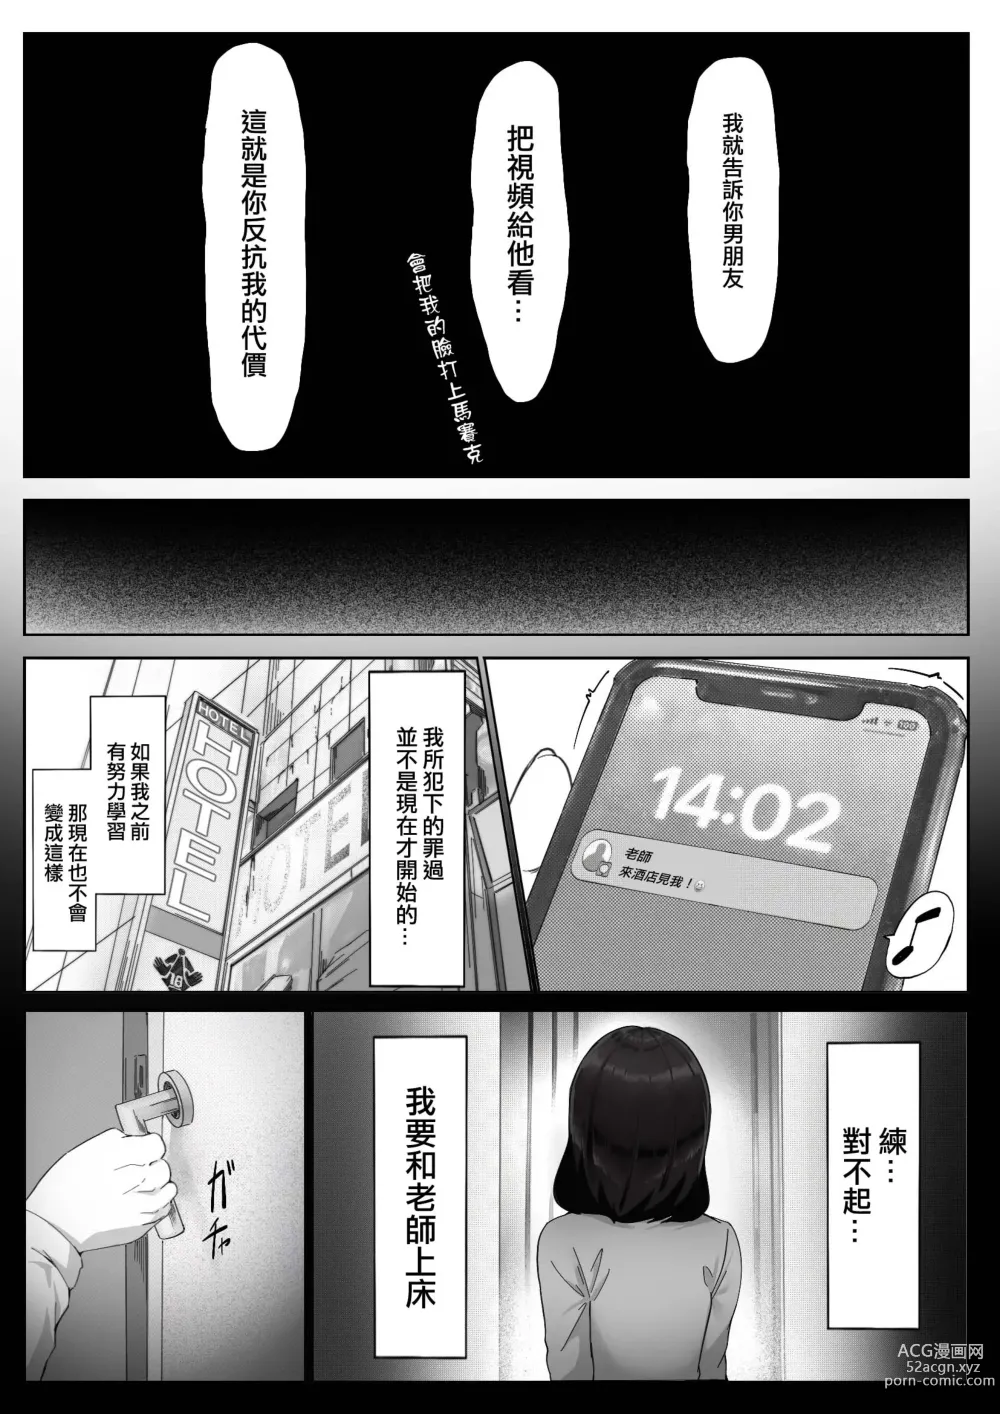 Page 18 of doujinshi 因為想要學分所以和老師上床了這件事